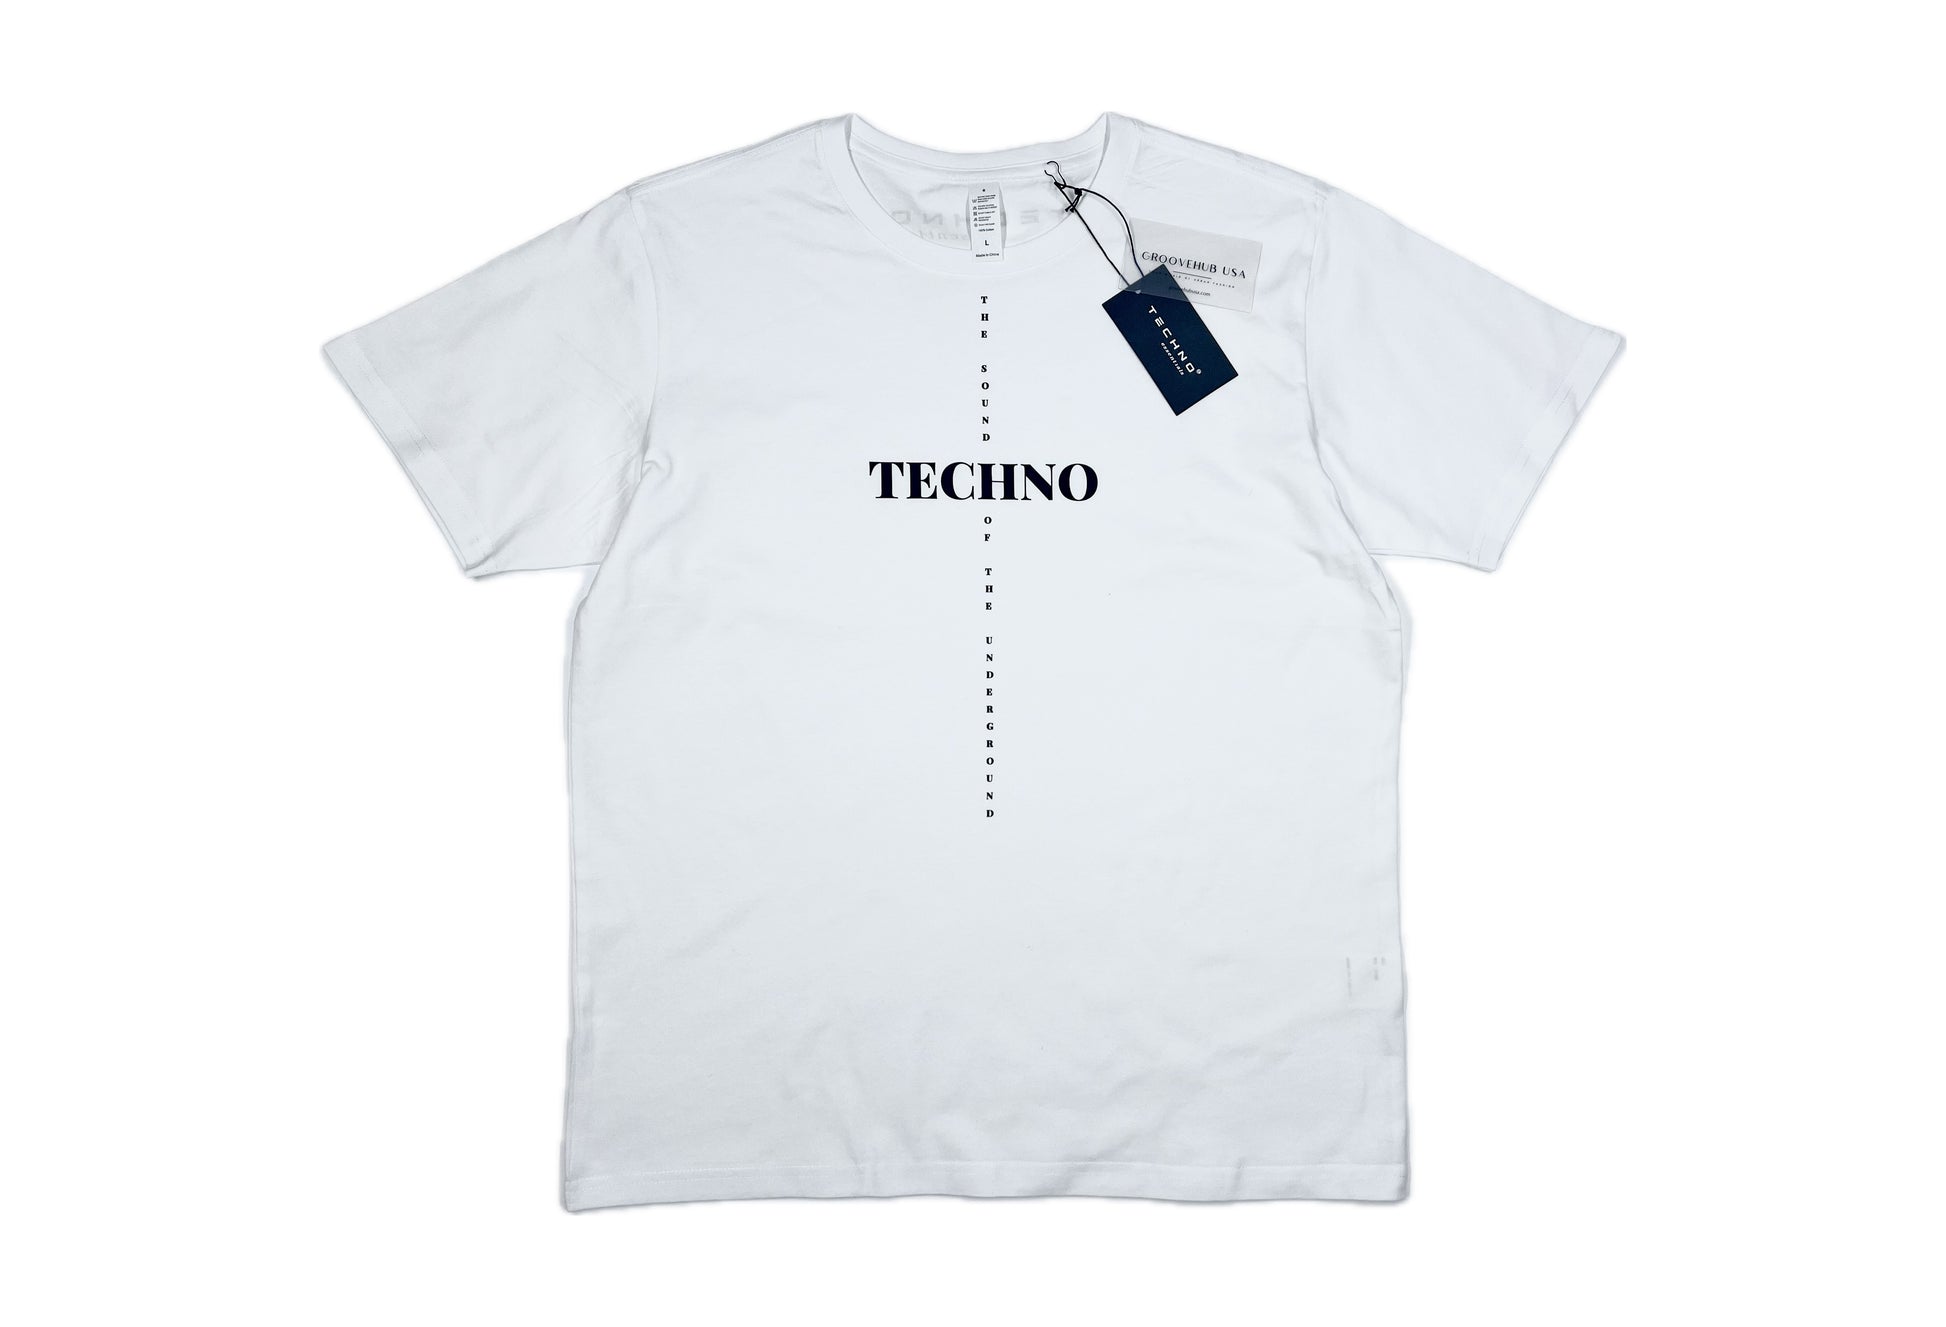 TECHNO essentials 100% Organic Cotton Premium Quality T-Shirt